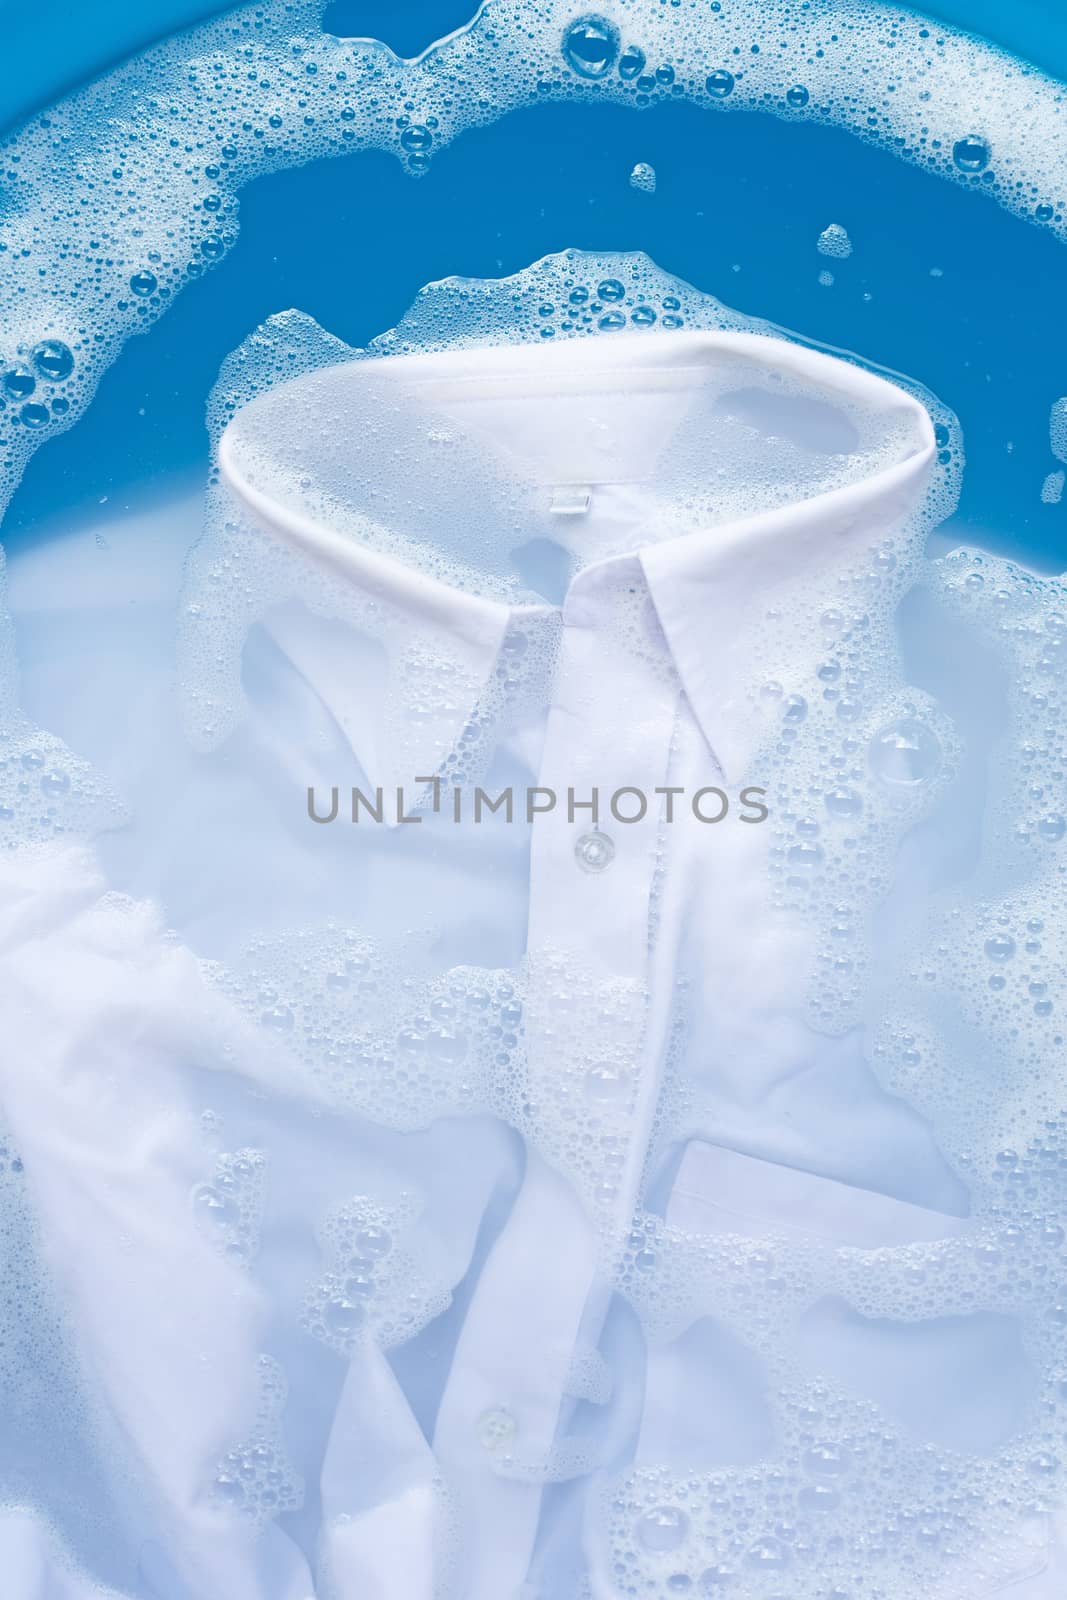 White shirt soak in powder detergent water dissolution, washing  cloth. Laundry concept